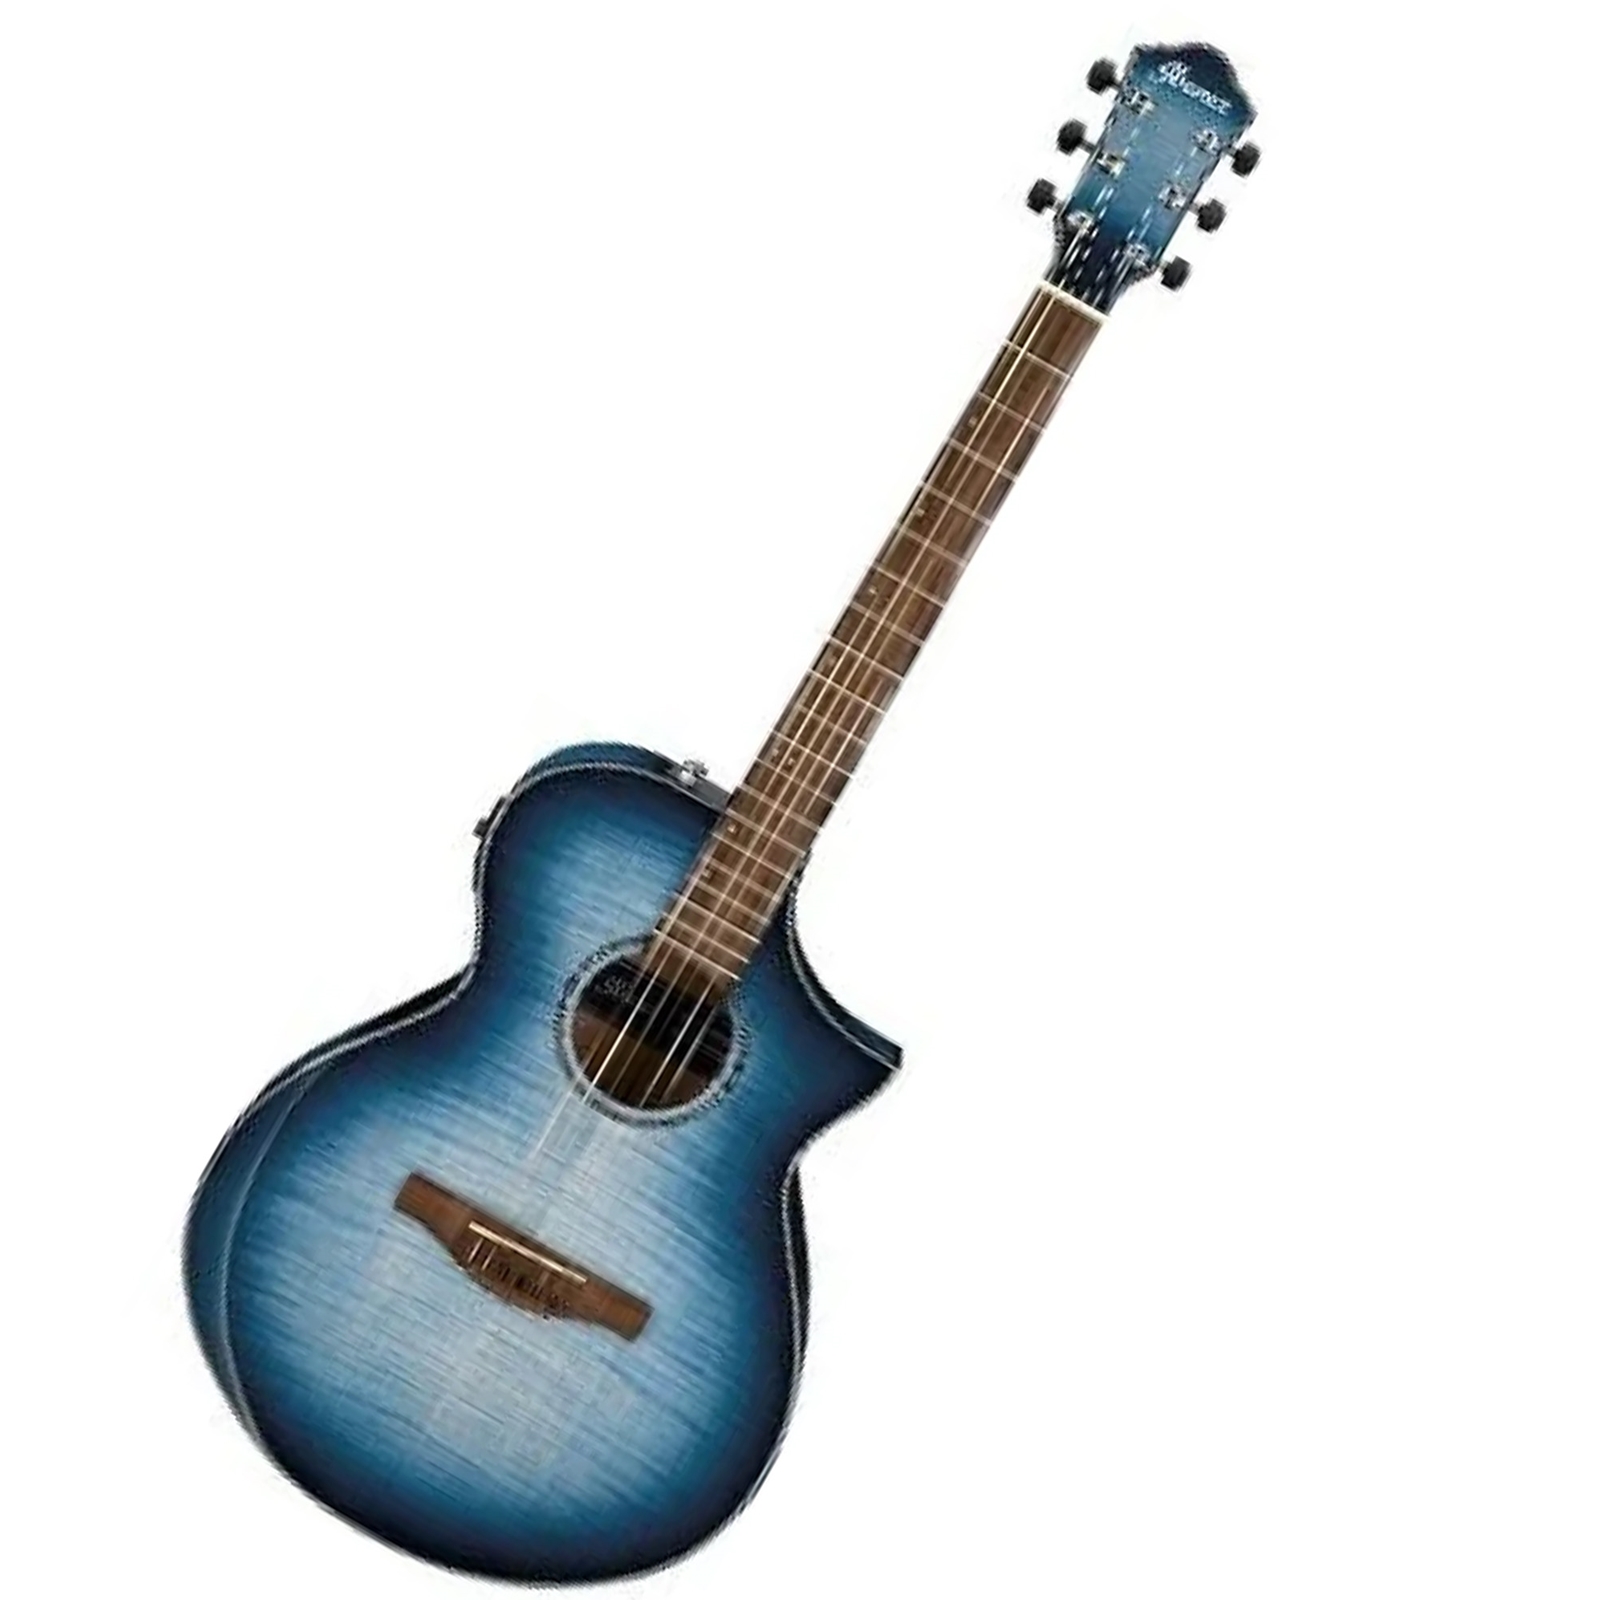 Ibanez AEWC400 Acoustic-Electric Guitar - Indigo Blue Burst